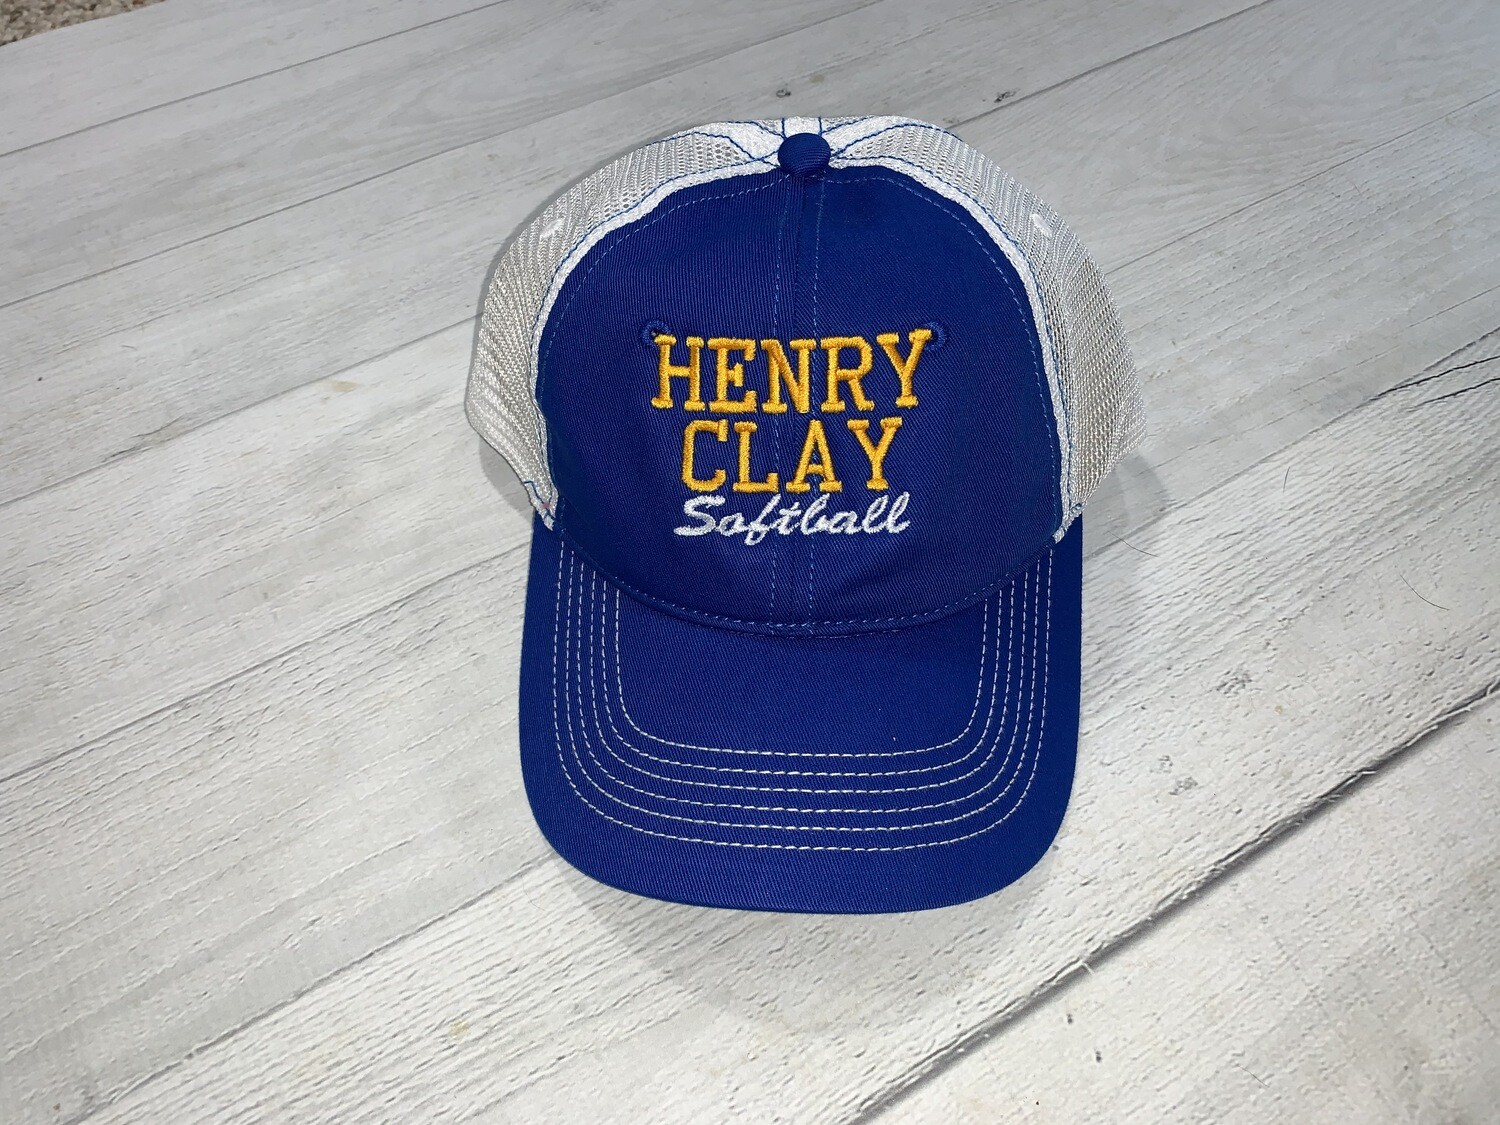 Henry Clay Softball Mesh Back Hat